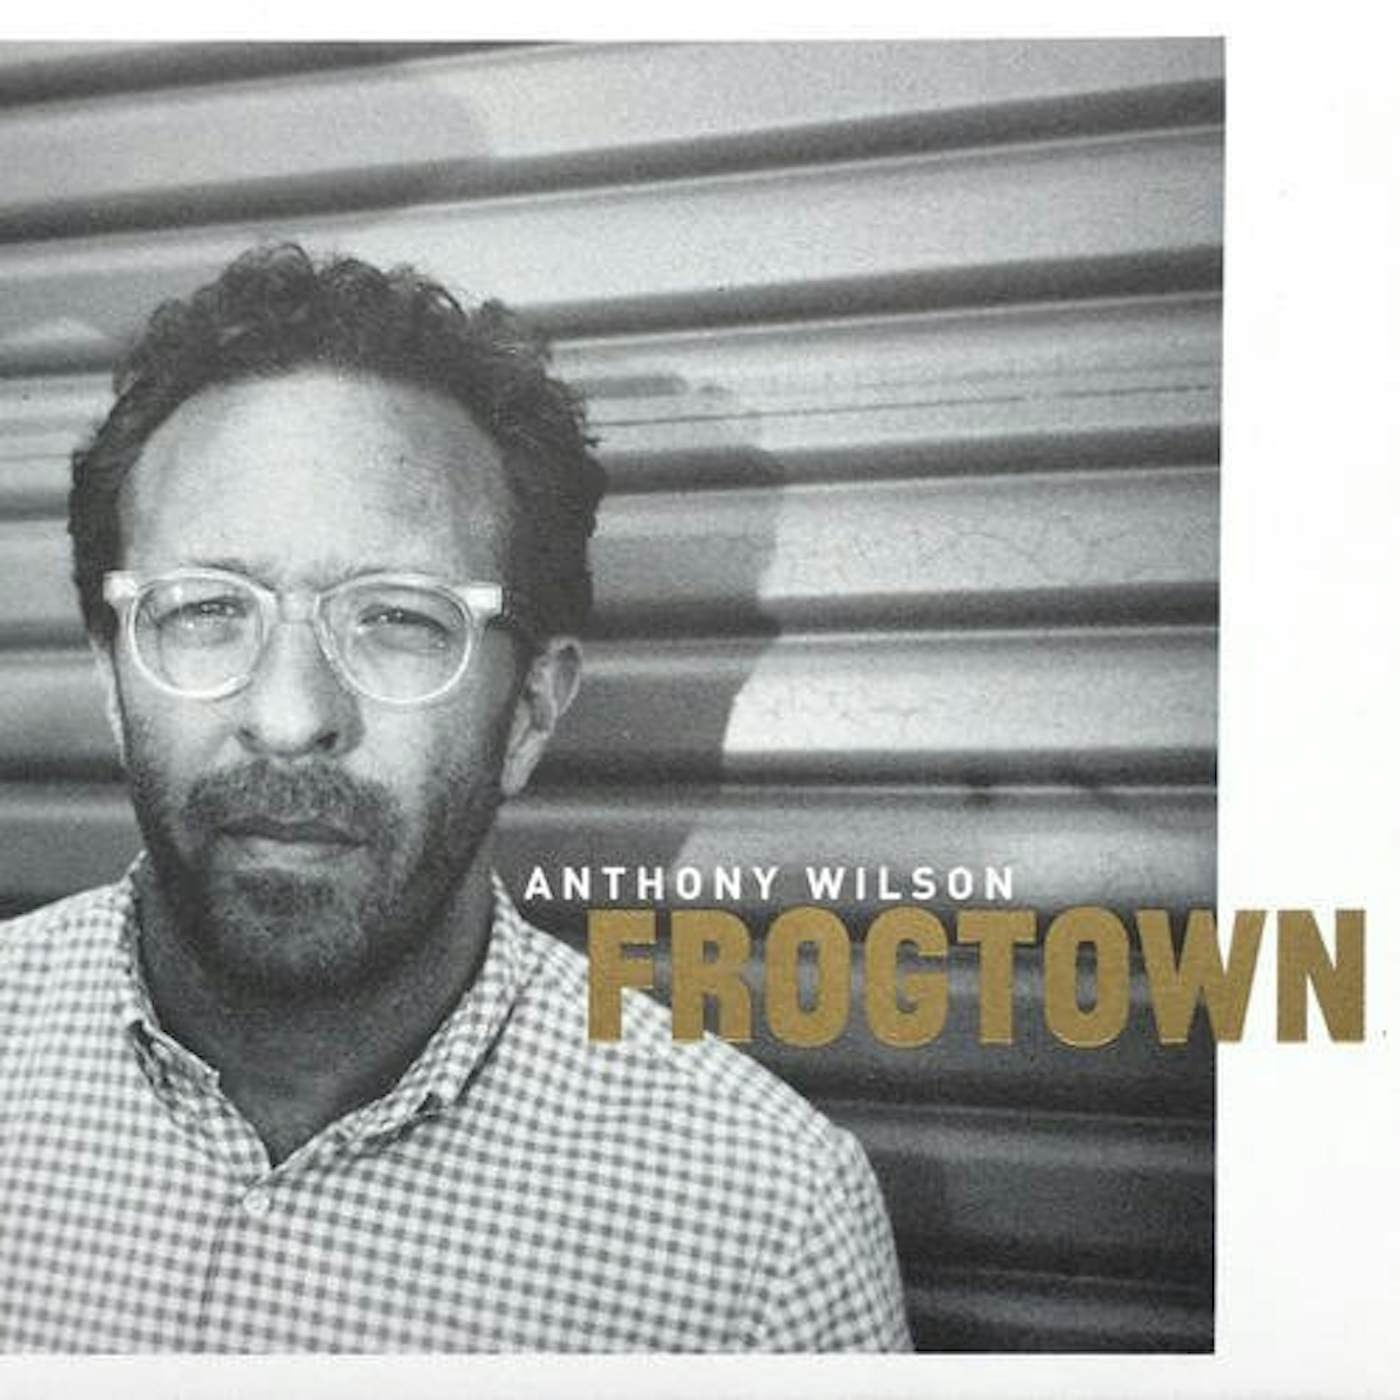 Anthony Wilson Frogtown Vinyl Record